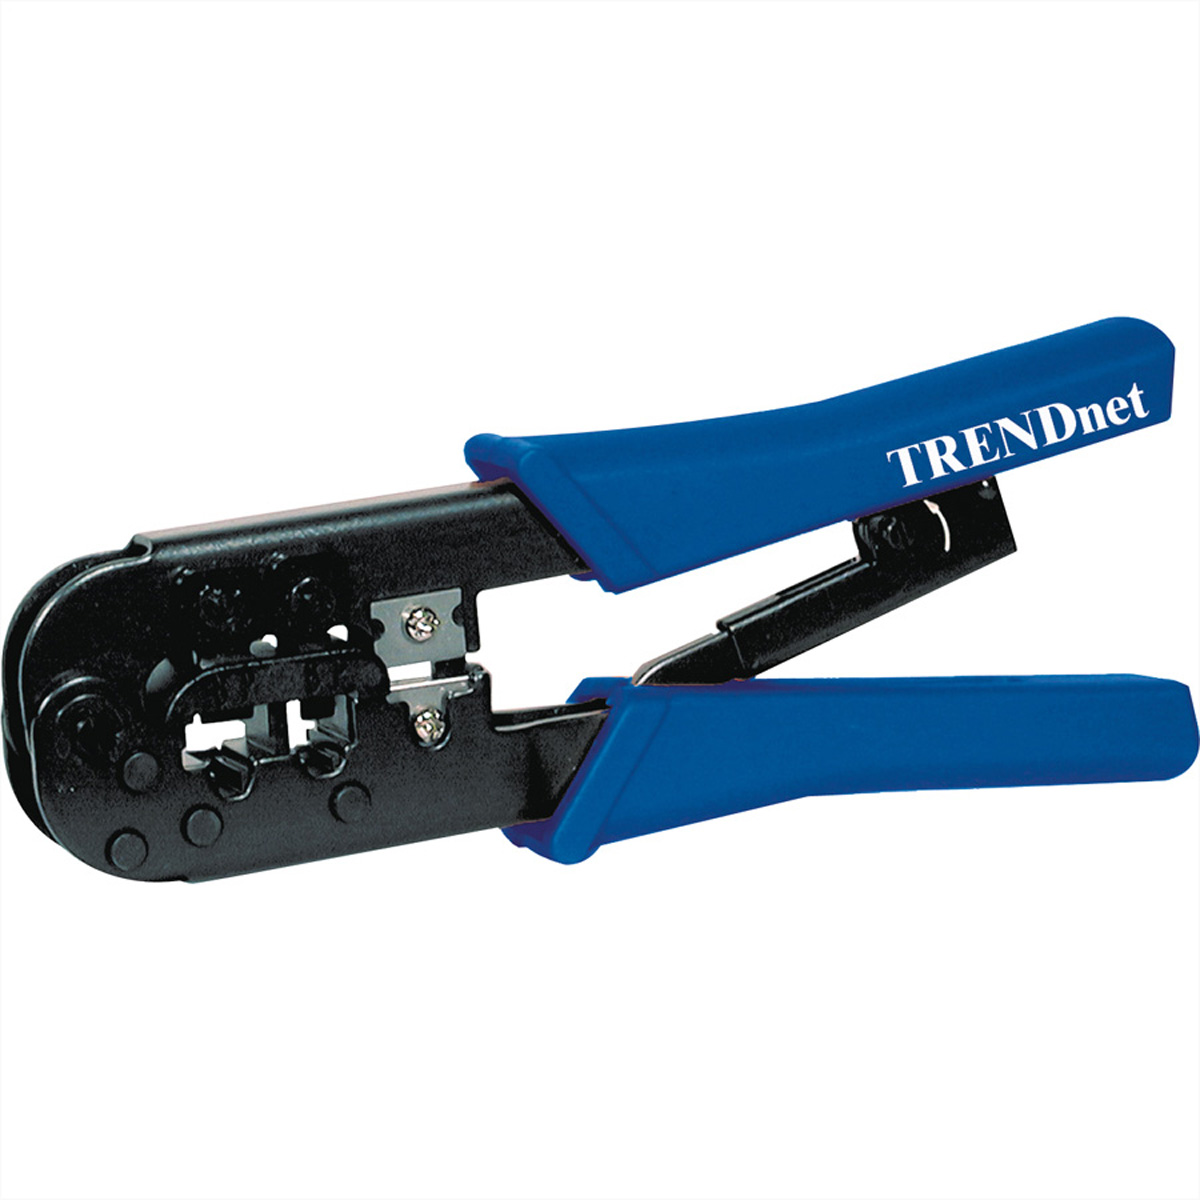 TRENDNET TC-CT68 Crimpwerkzeug RJ-11/RJ-45 Crimp/Cut/Strip Kabel-Crimper Tool